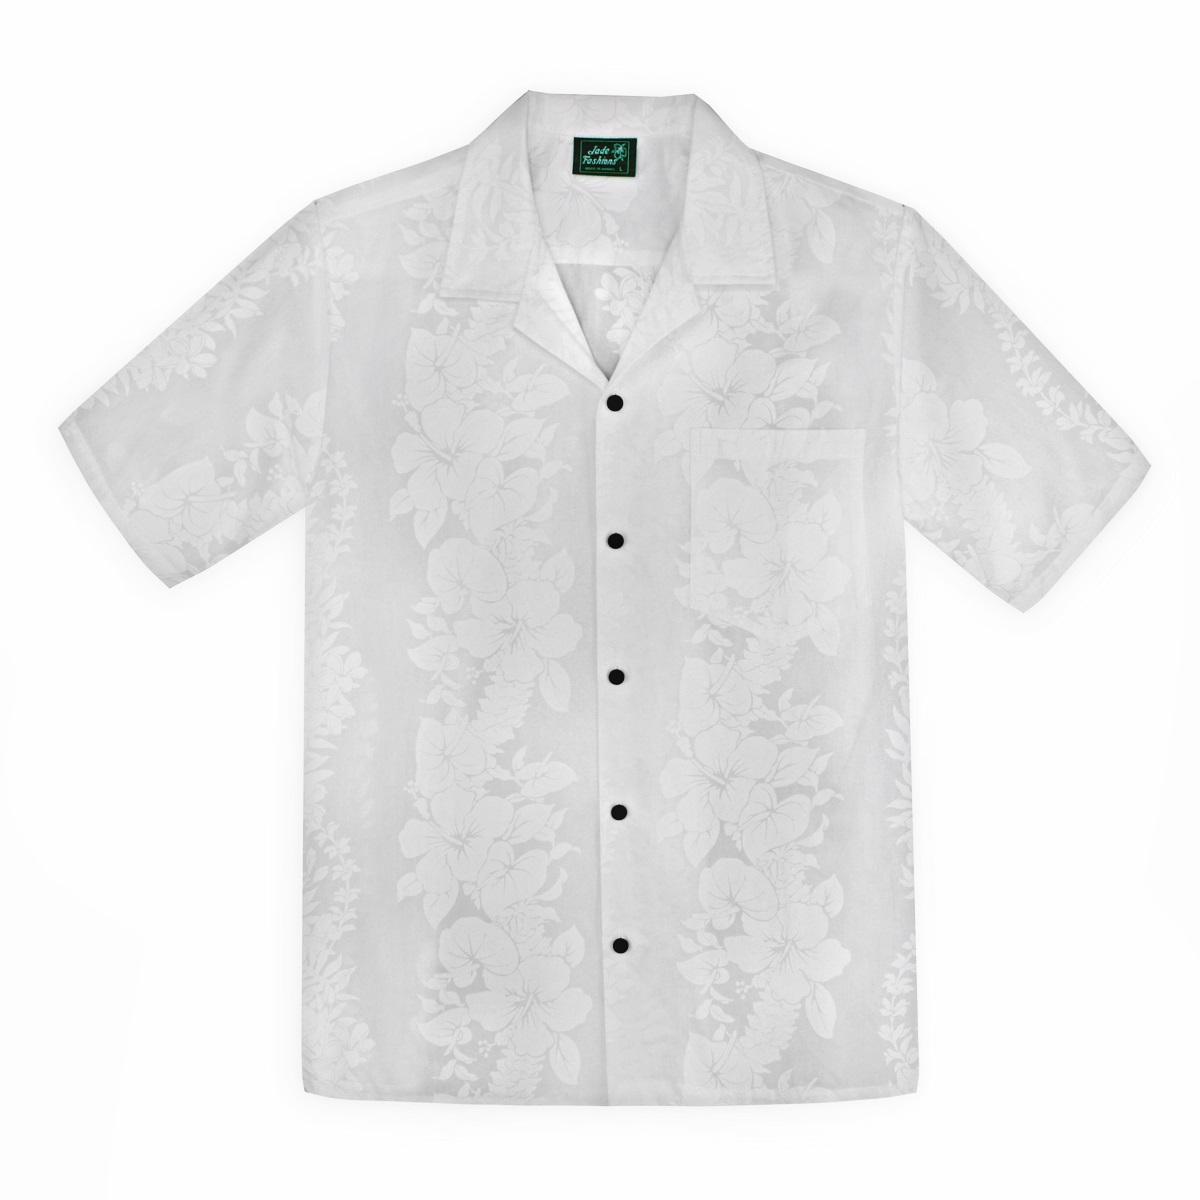 mens-hawaiian-shirt-romantica-white-on-white